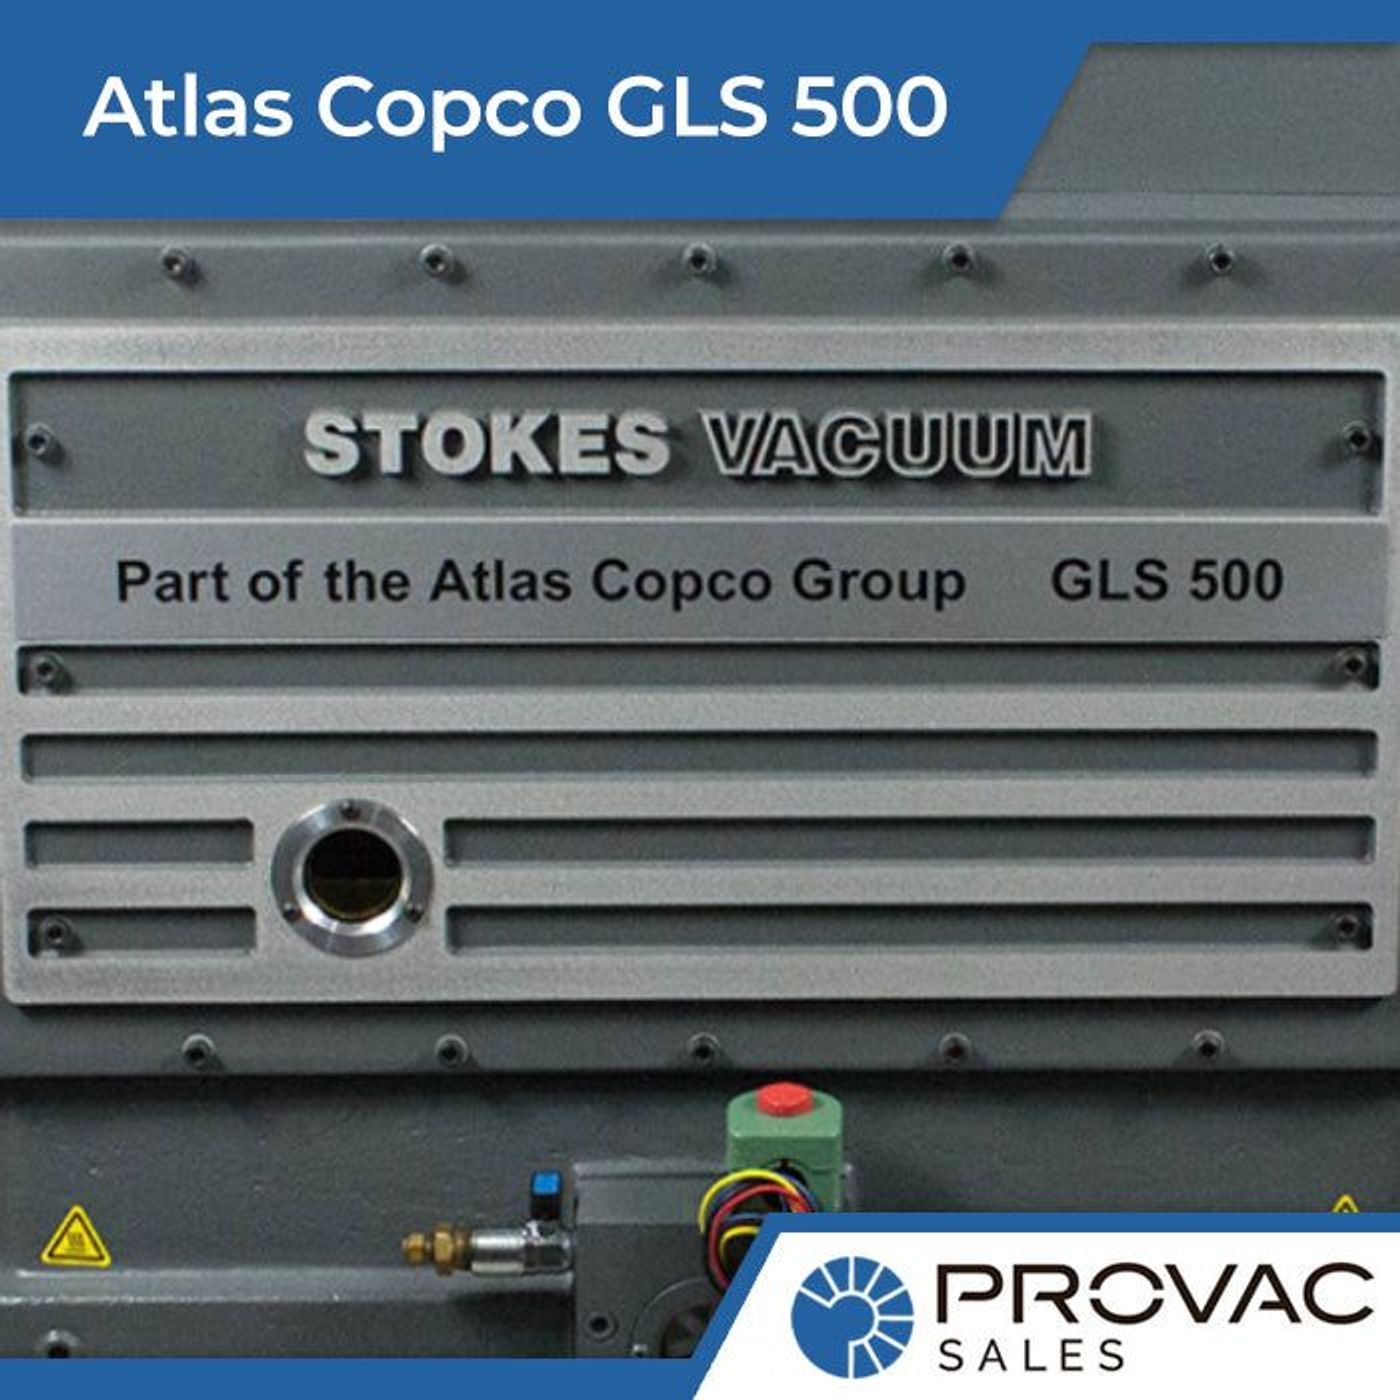 On Sale Now: New Atlas Copco GLS 500 Piston Pump